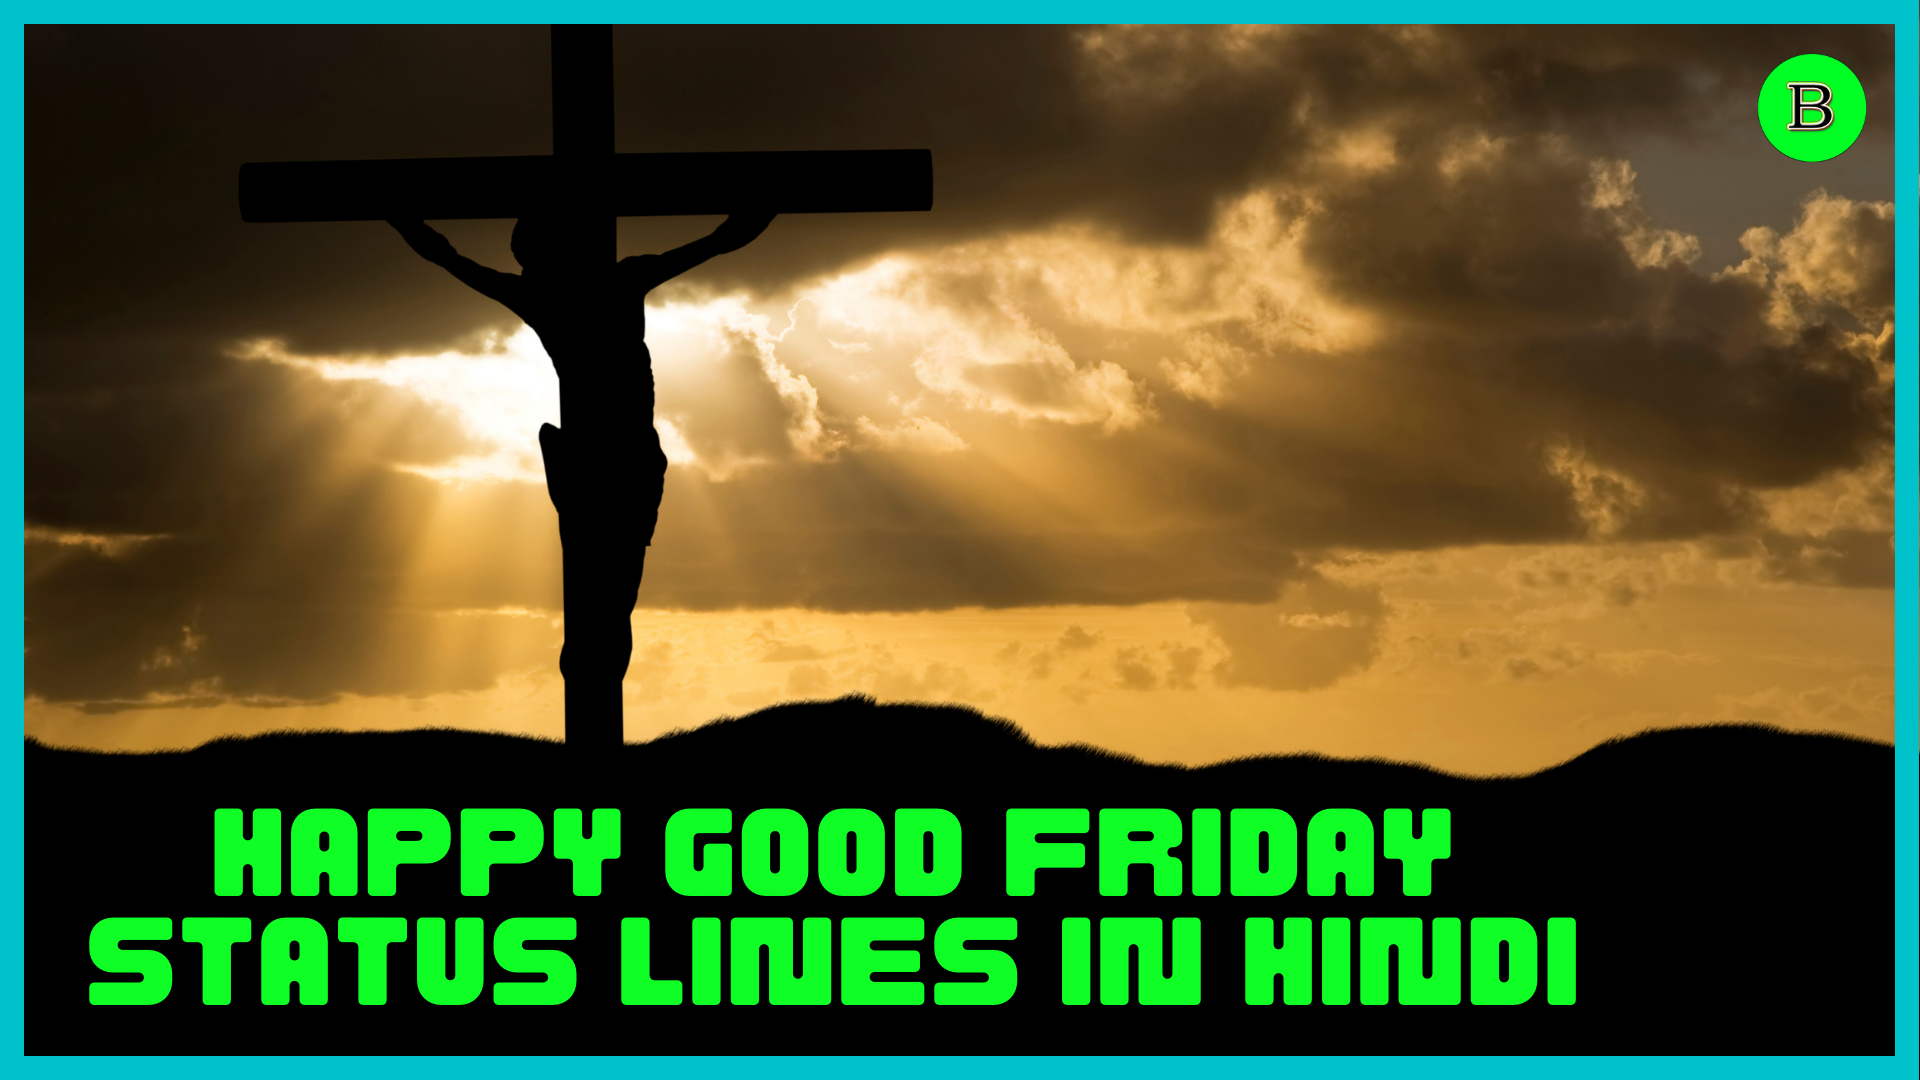 Happy Good Friday Status Lines in Hindi